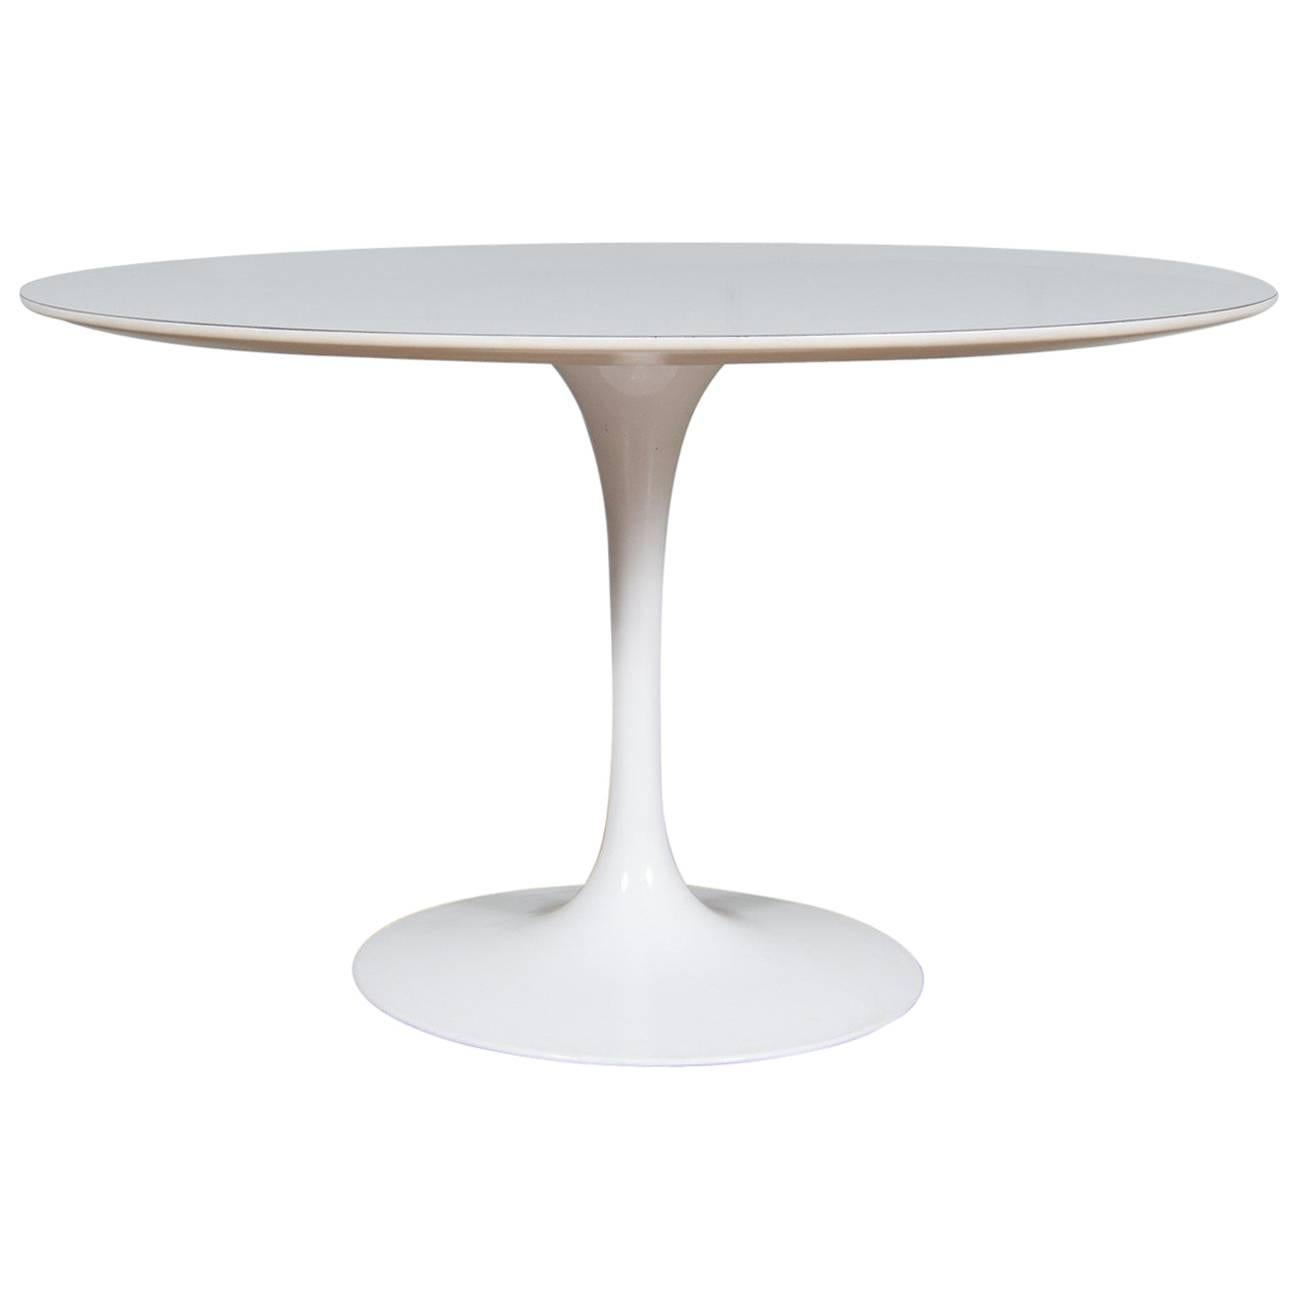 Vintage Eero Saarinen Tulip Coffee Table Designed in the 1950s